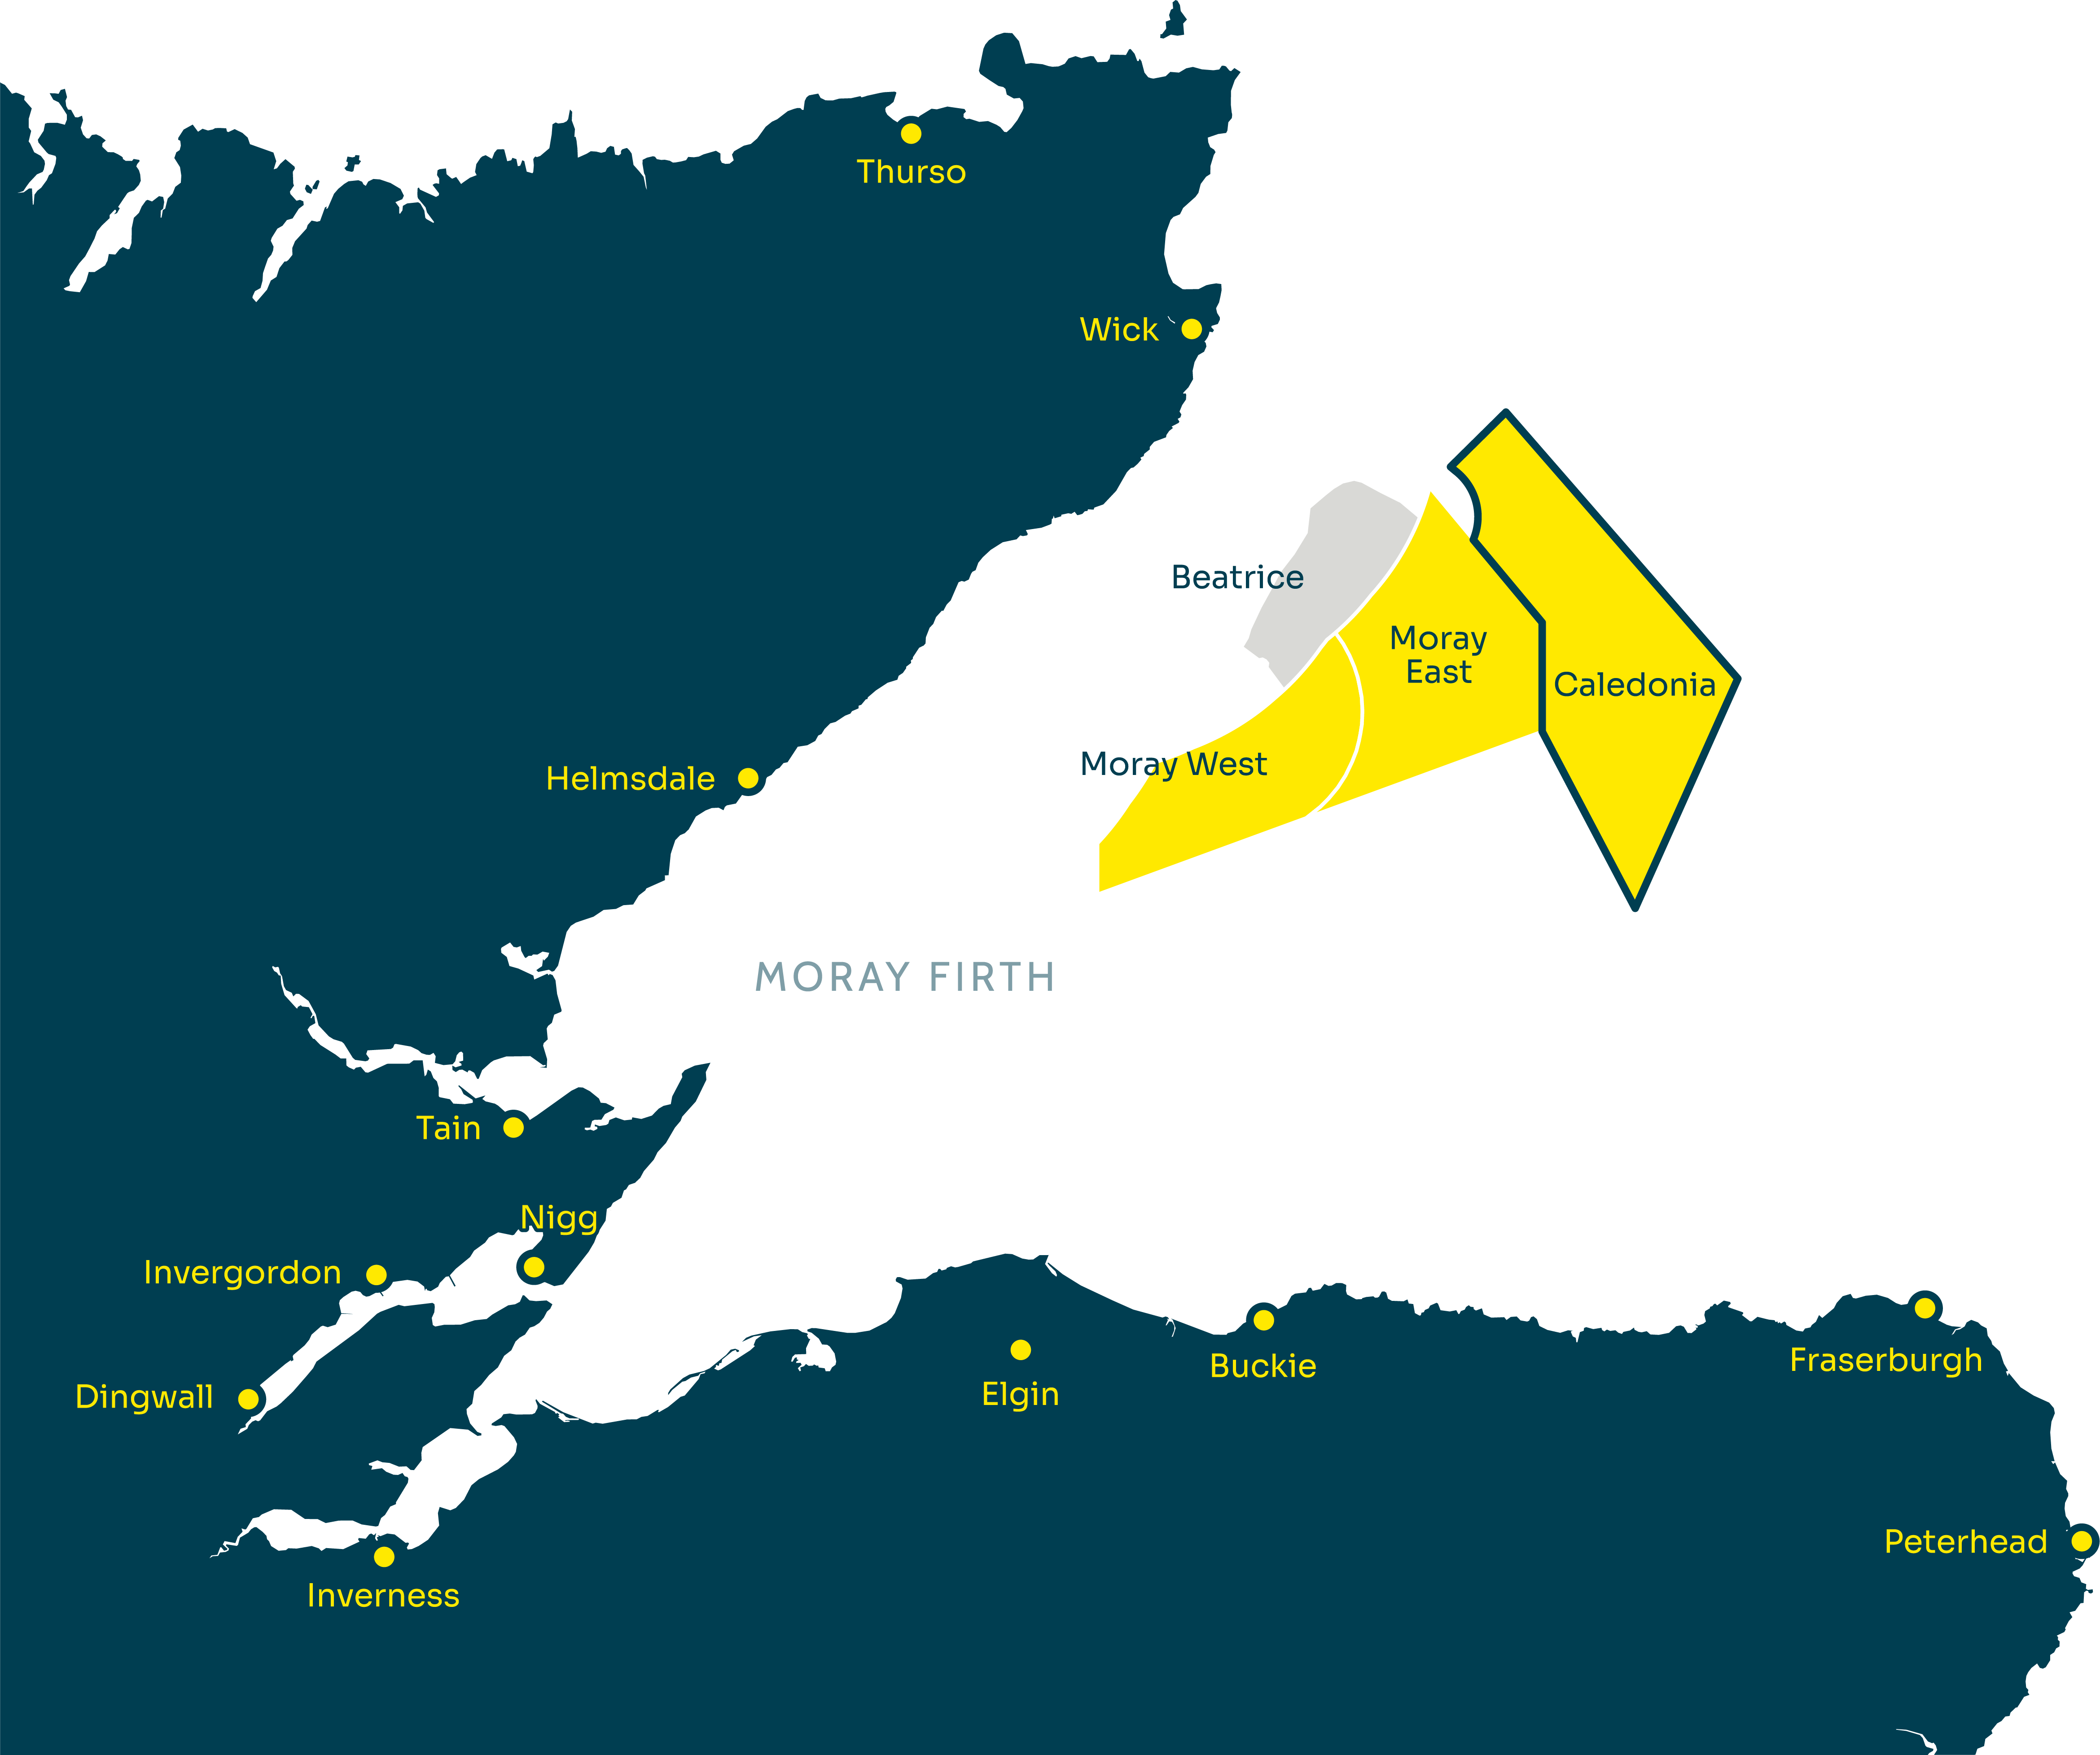 Caledonia offshore wind farm